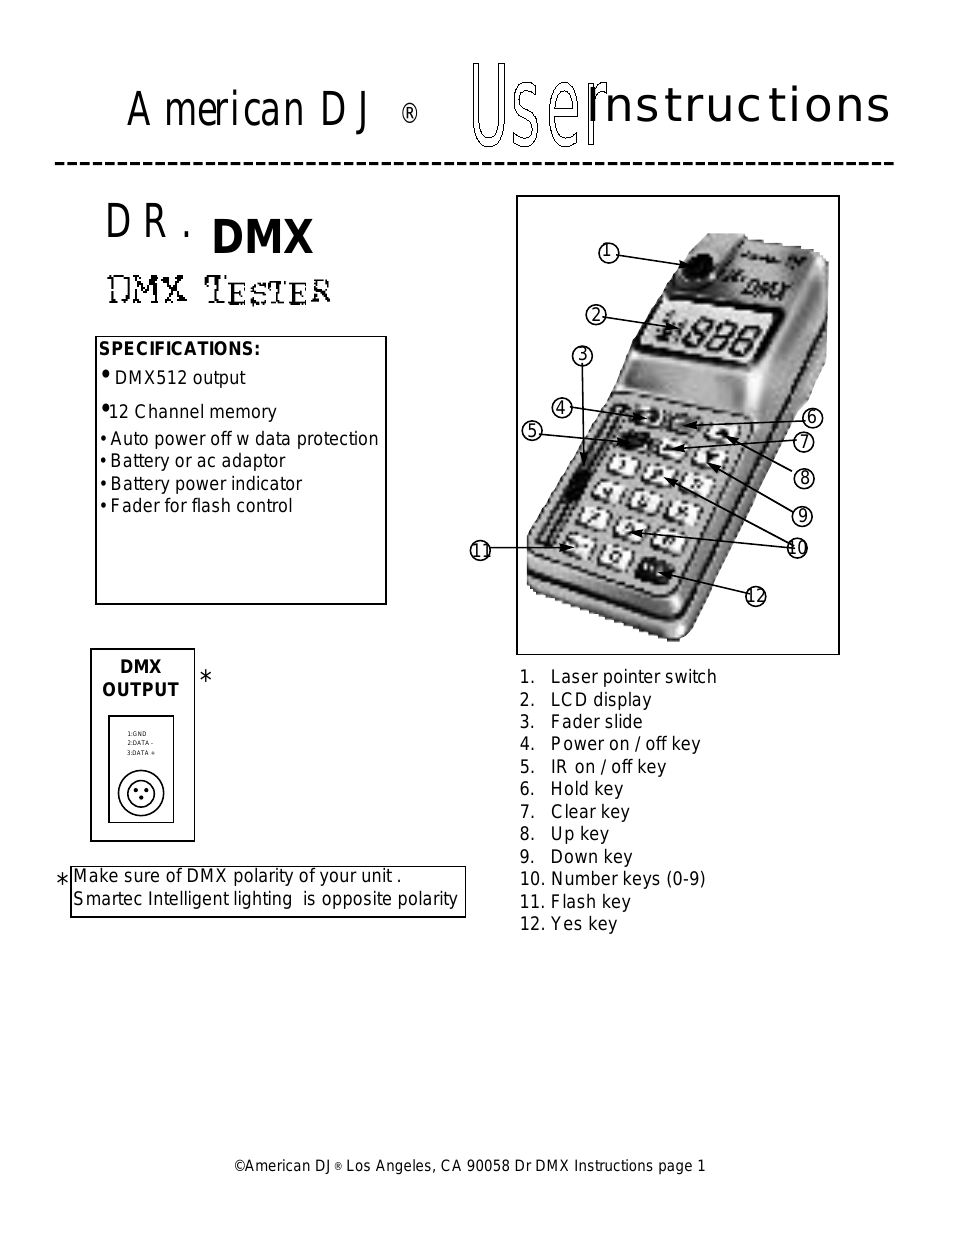 Dr. DMX